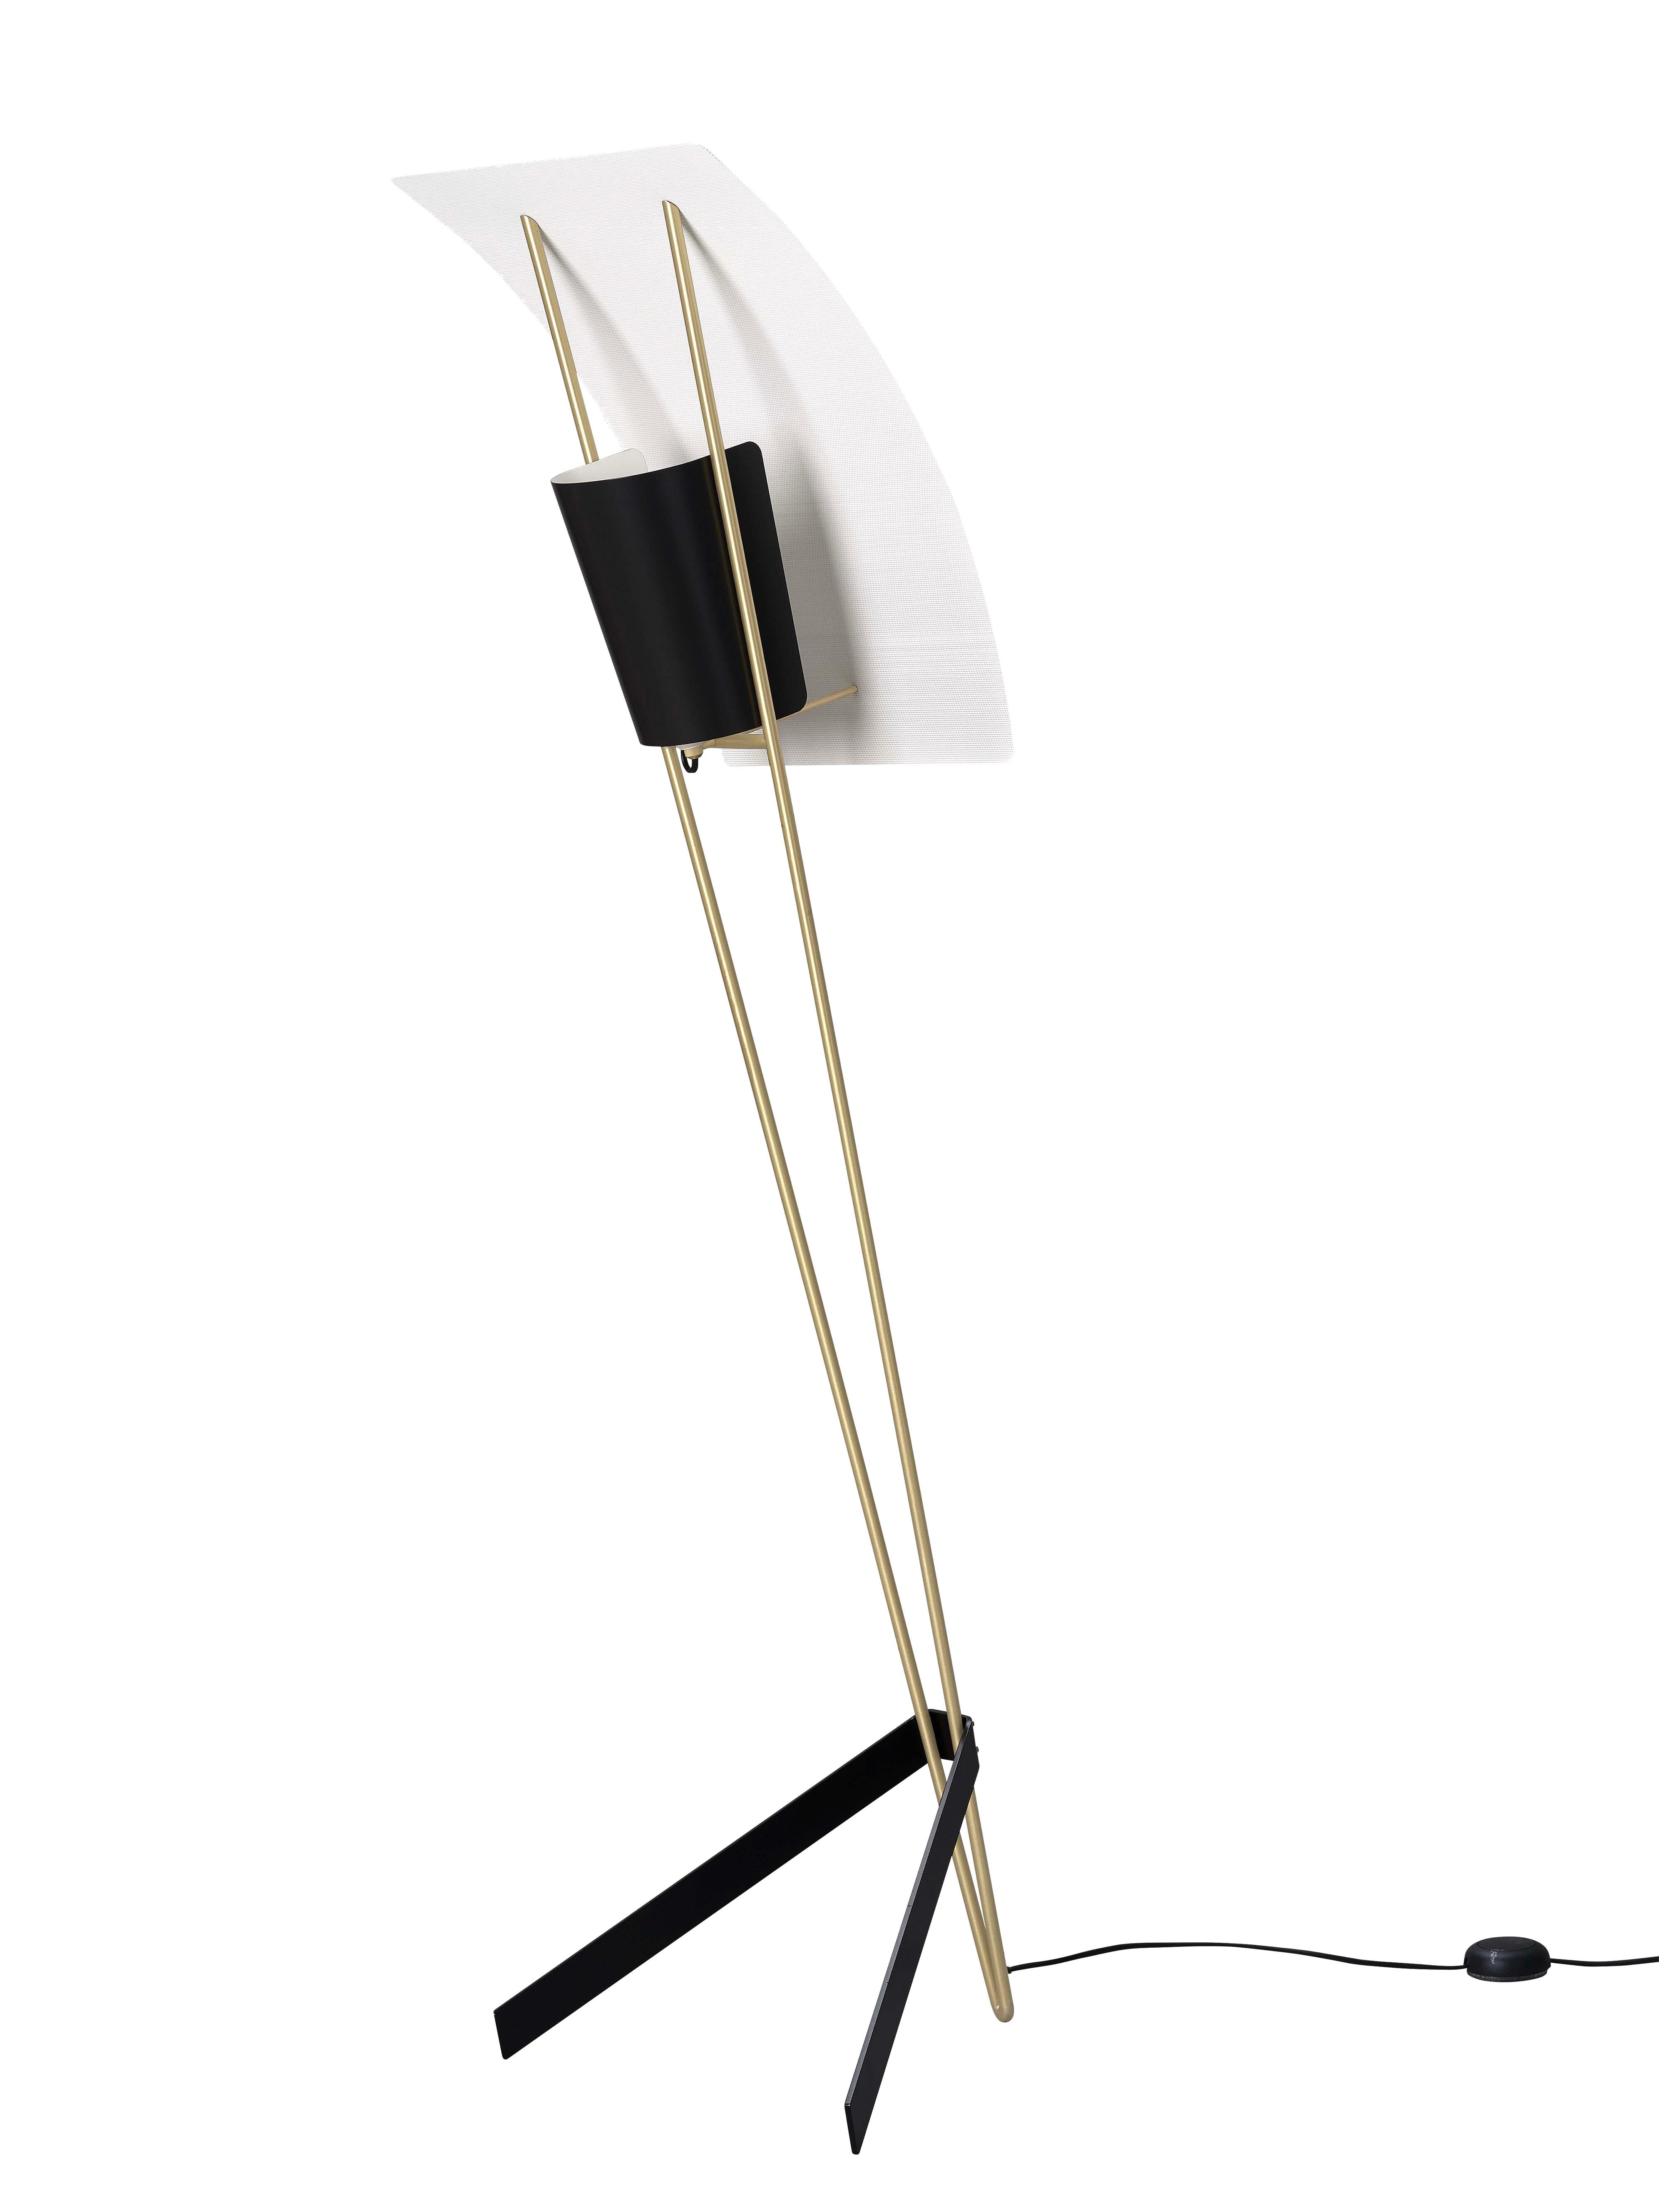 Contemporary Pierre Guariche Kite Floor Lamp in Black and White for Sammode Studio For Sale